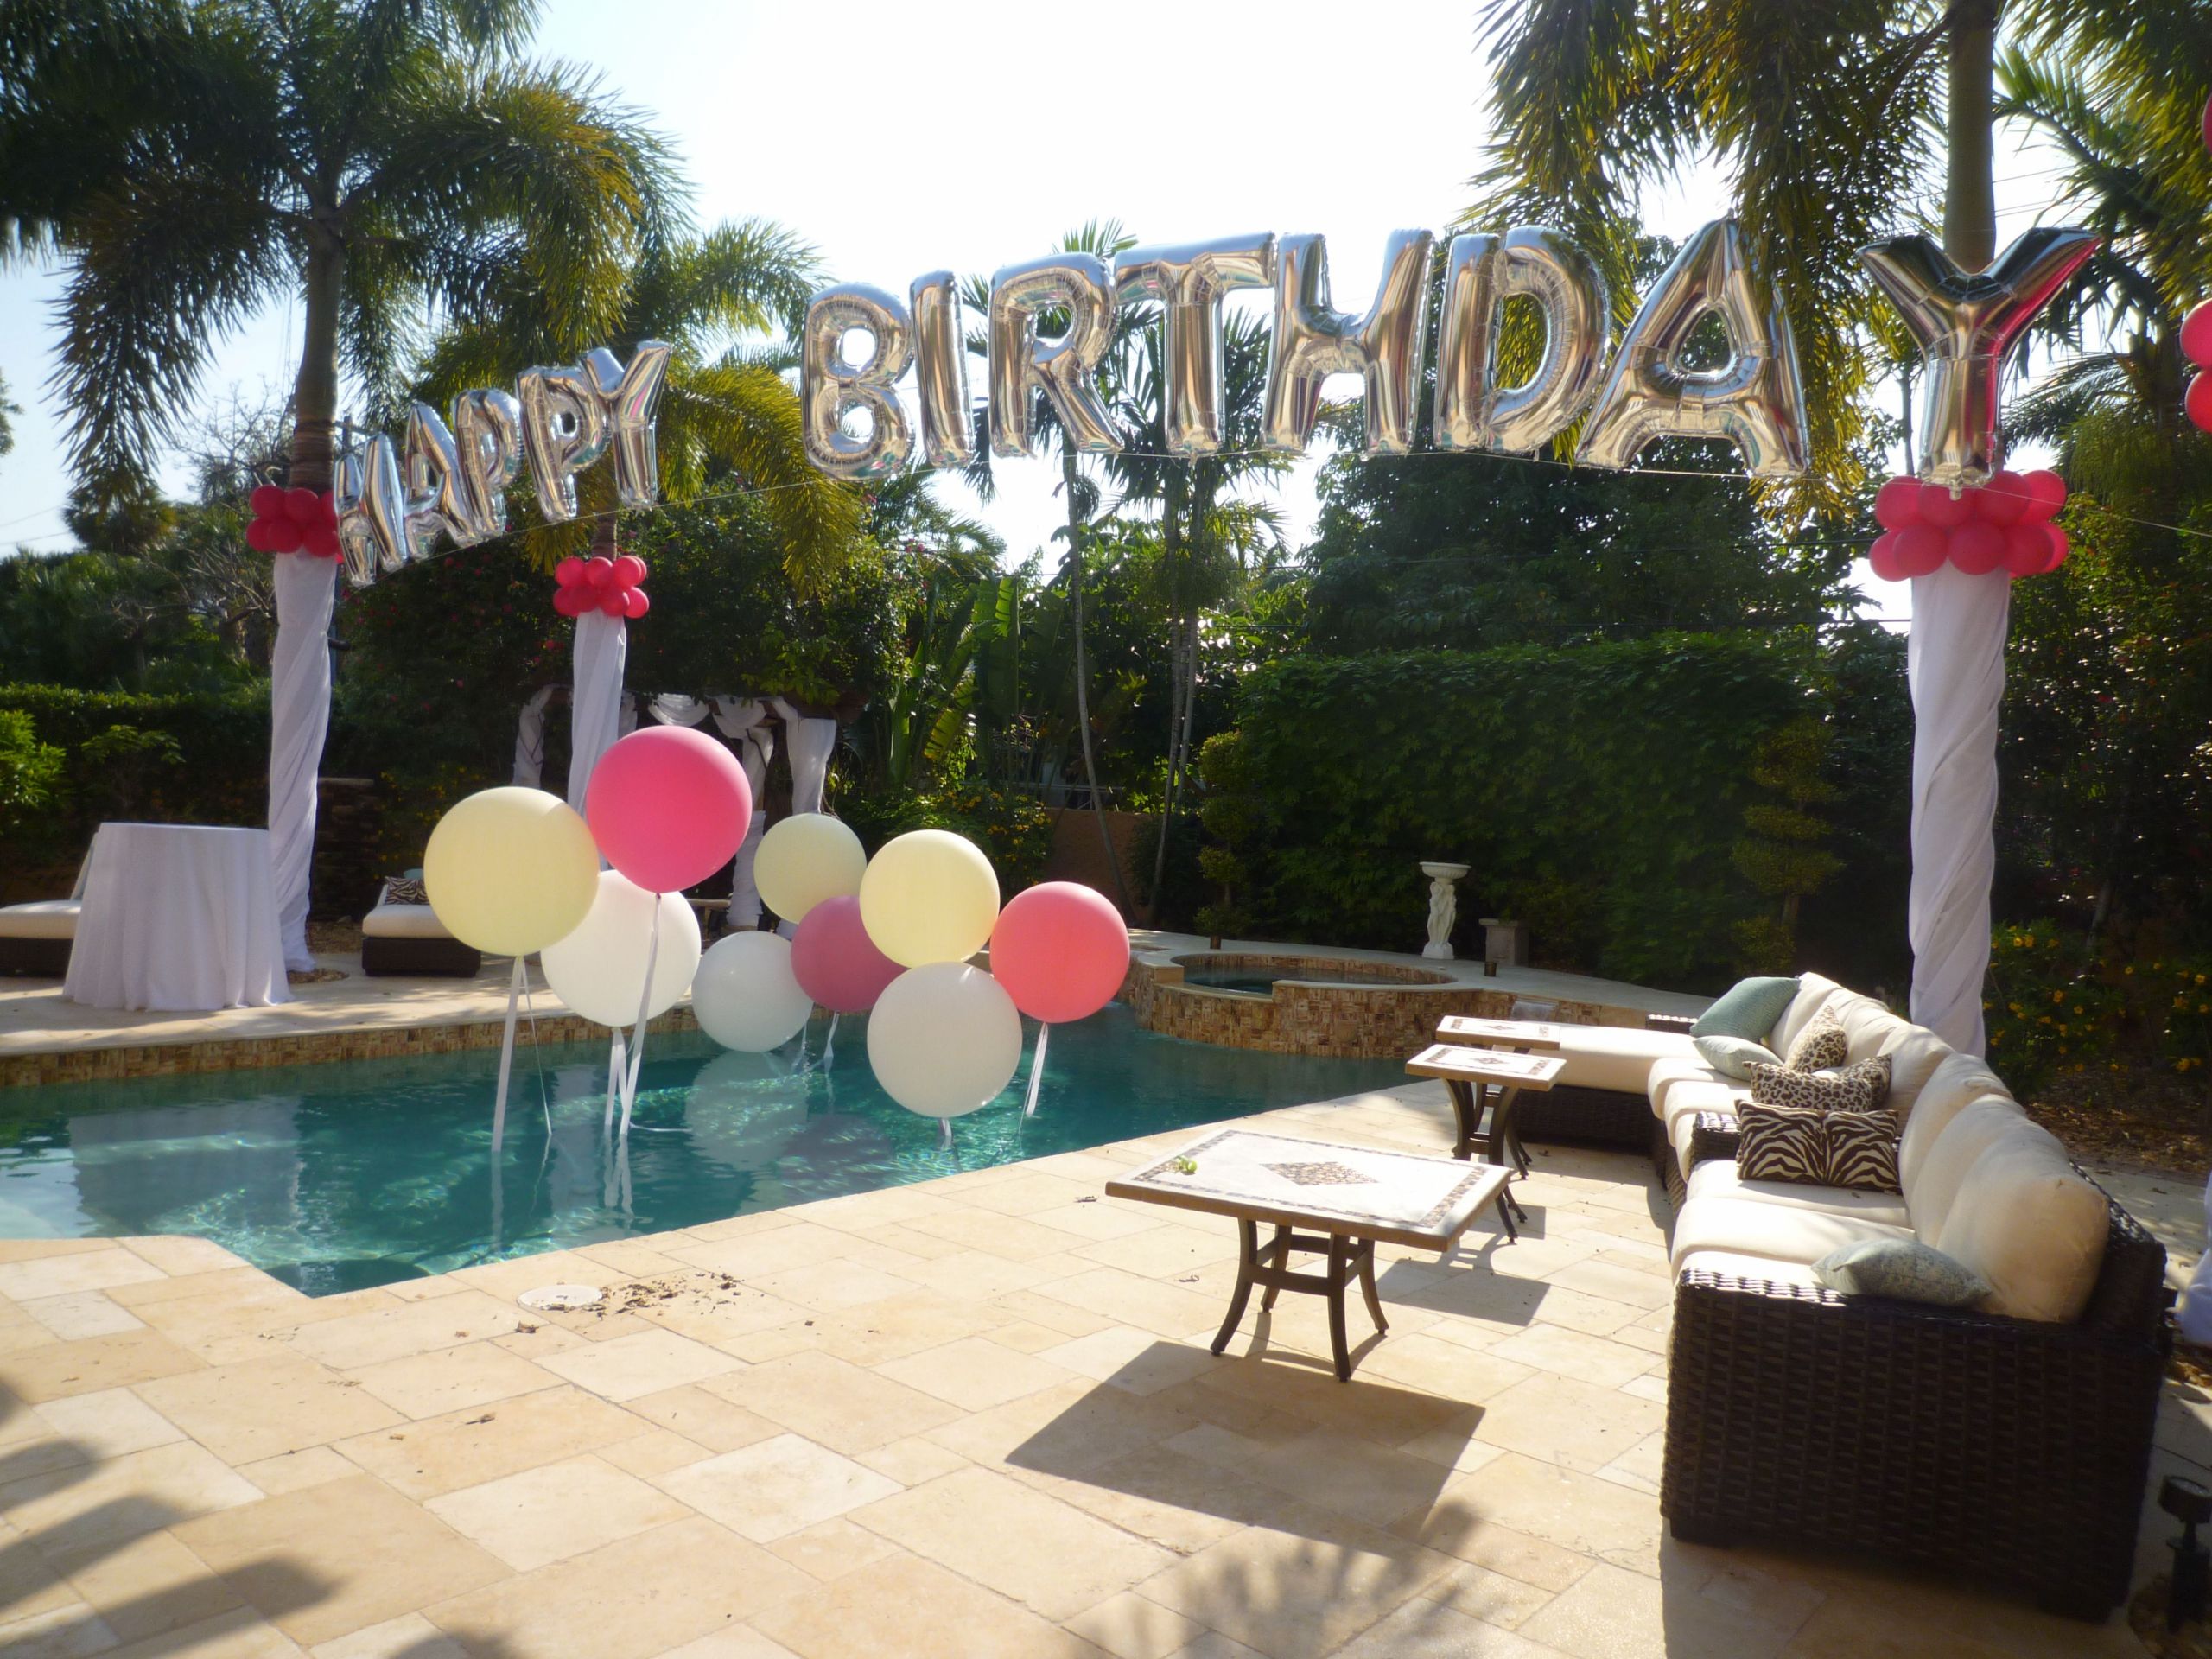 Ideas For Backyard Girls Birthday Pool Party
 Backyard Party Decorations